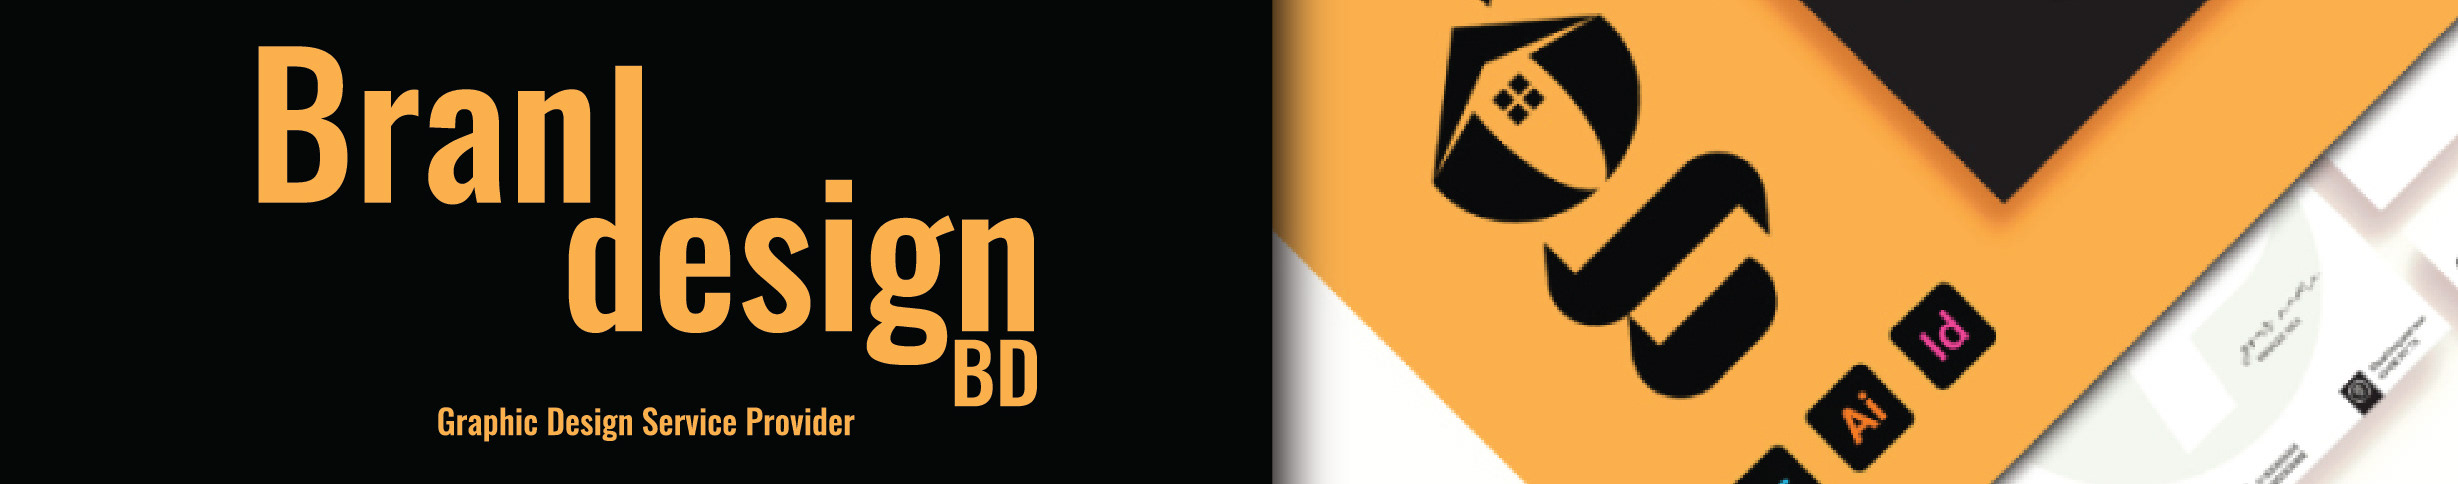 brandesign bd's profile banner